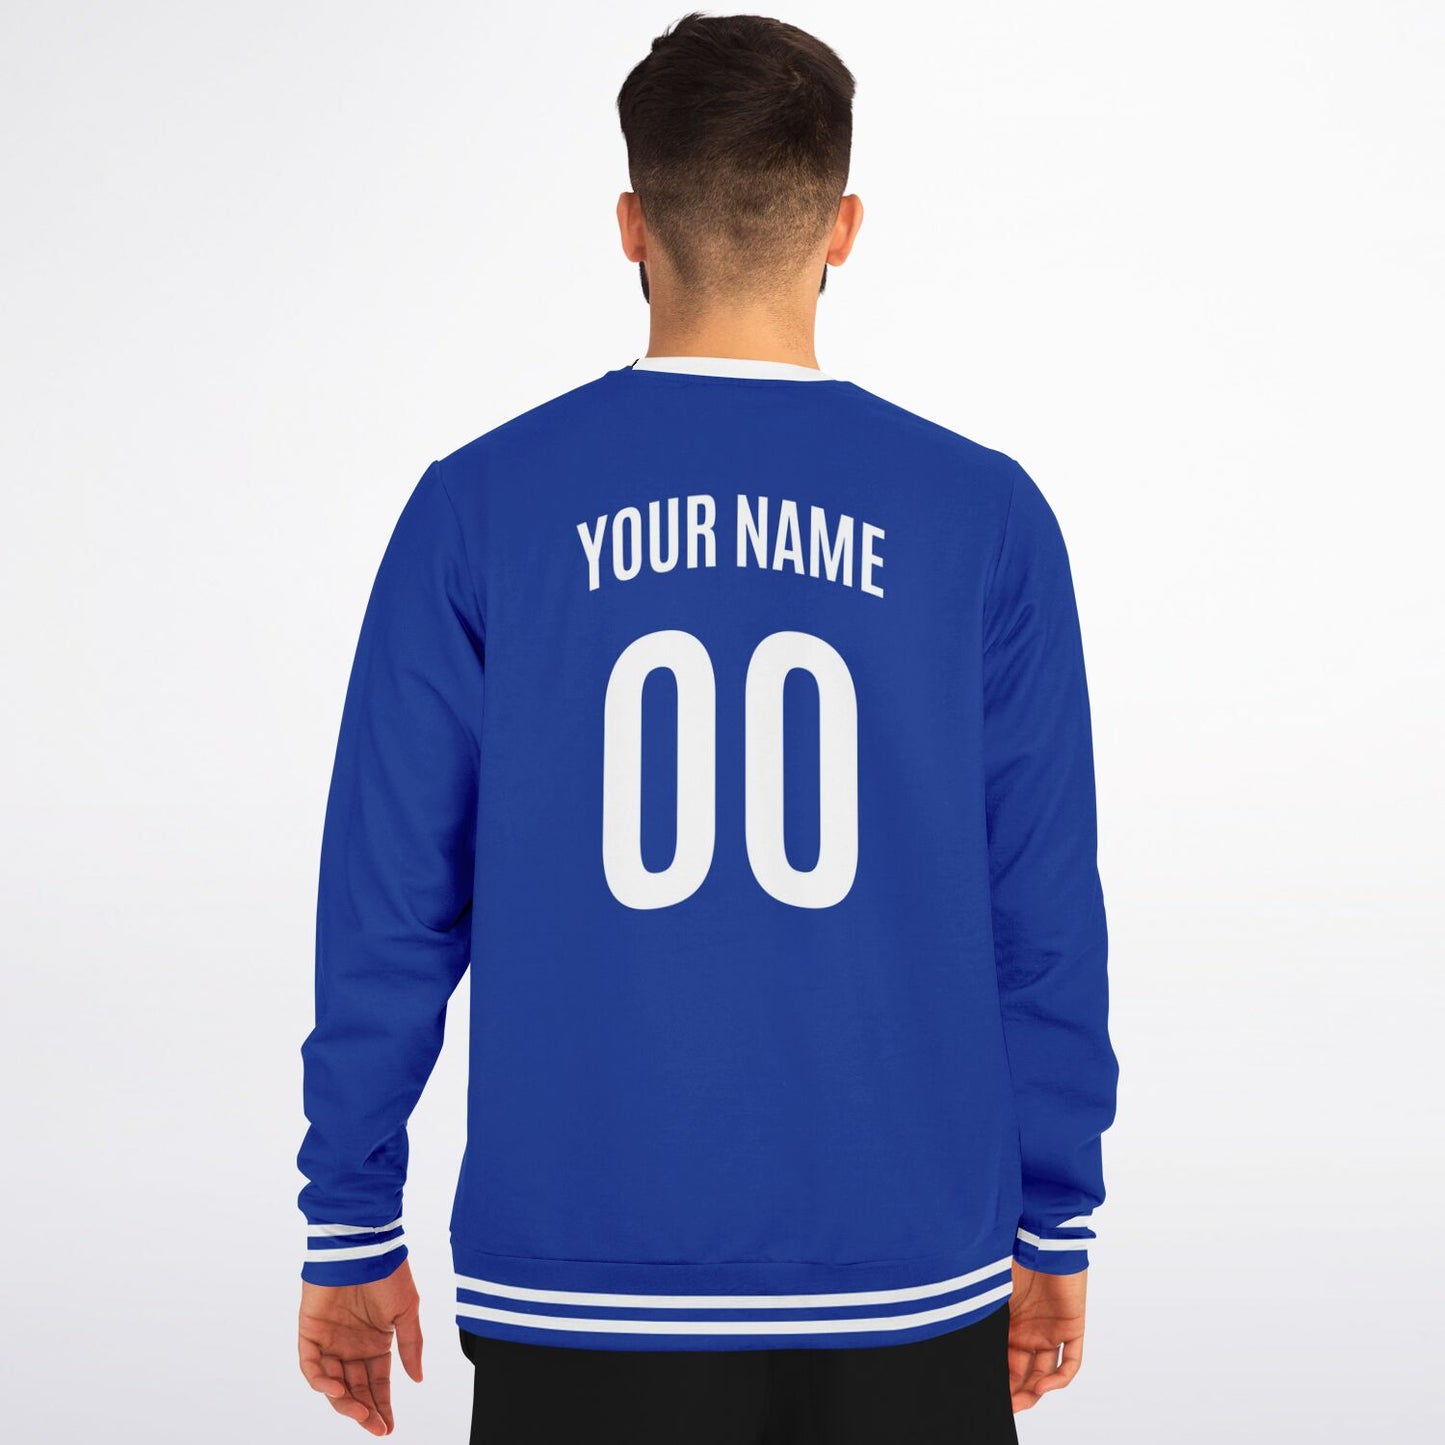 Italy Jersey Sweatshirt - Custom Name & Number